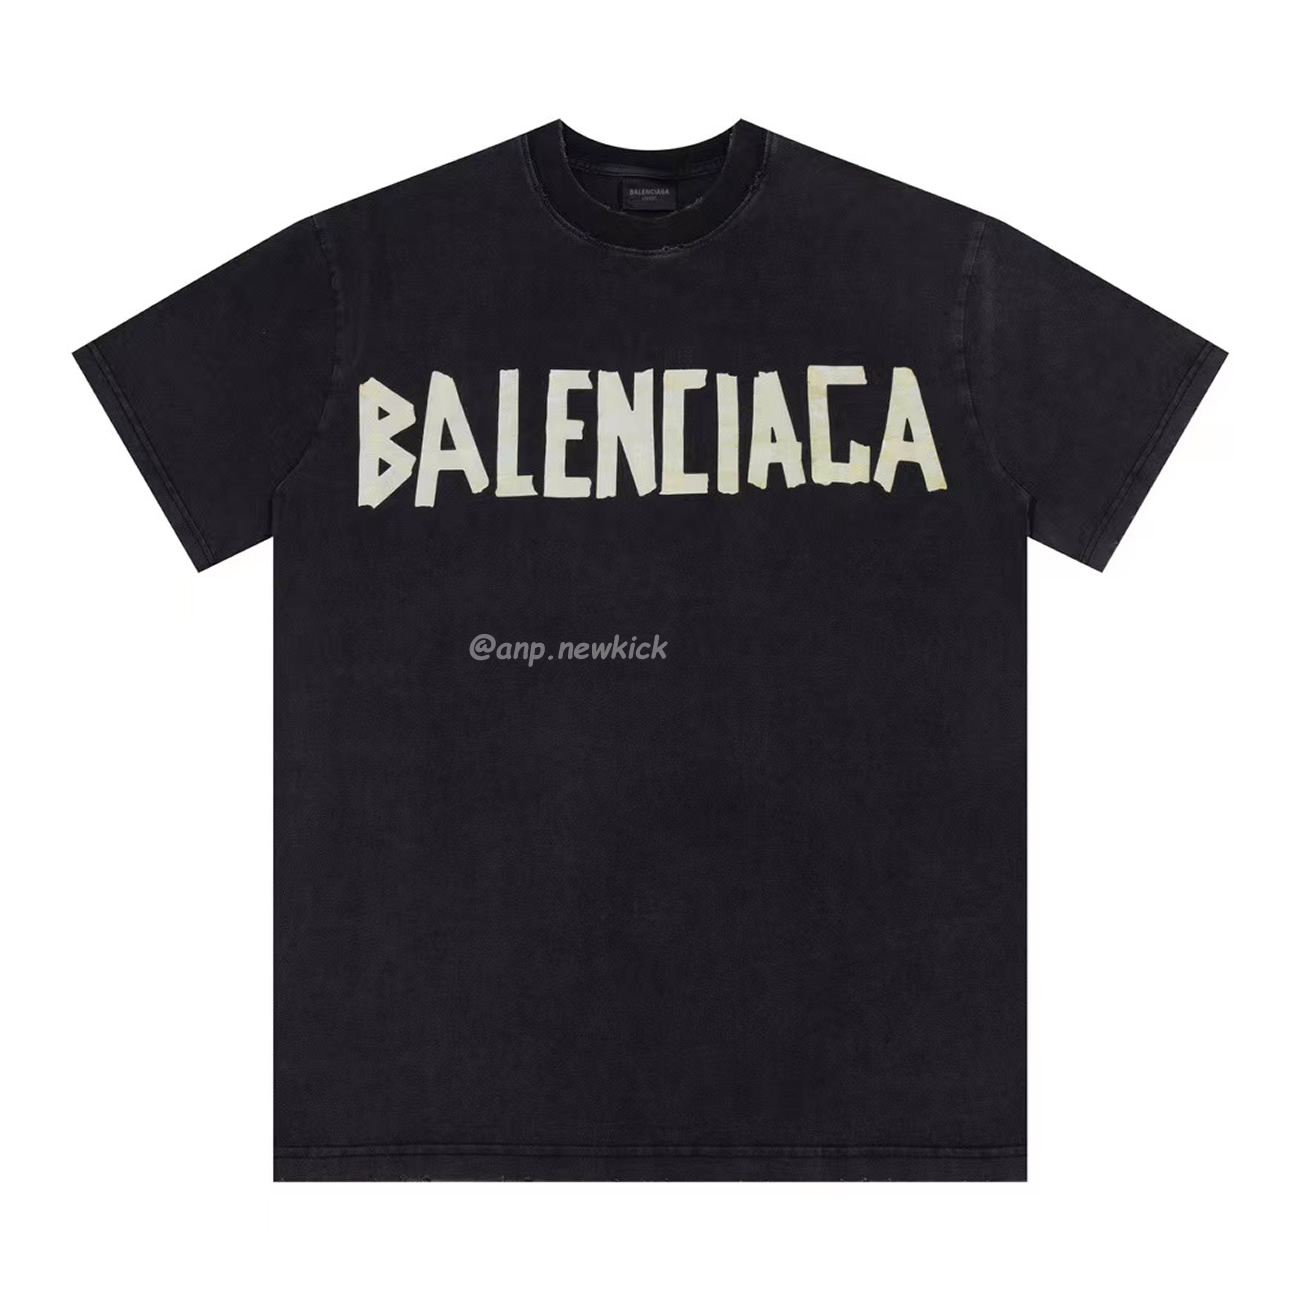 Balenciaga Tape Type T Shirt Black (1) - newkick.org